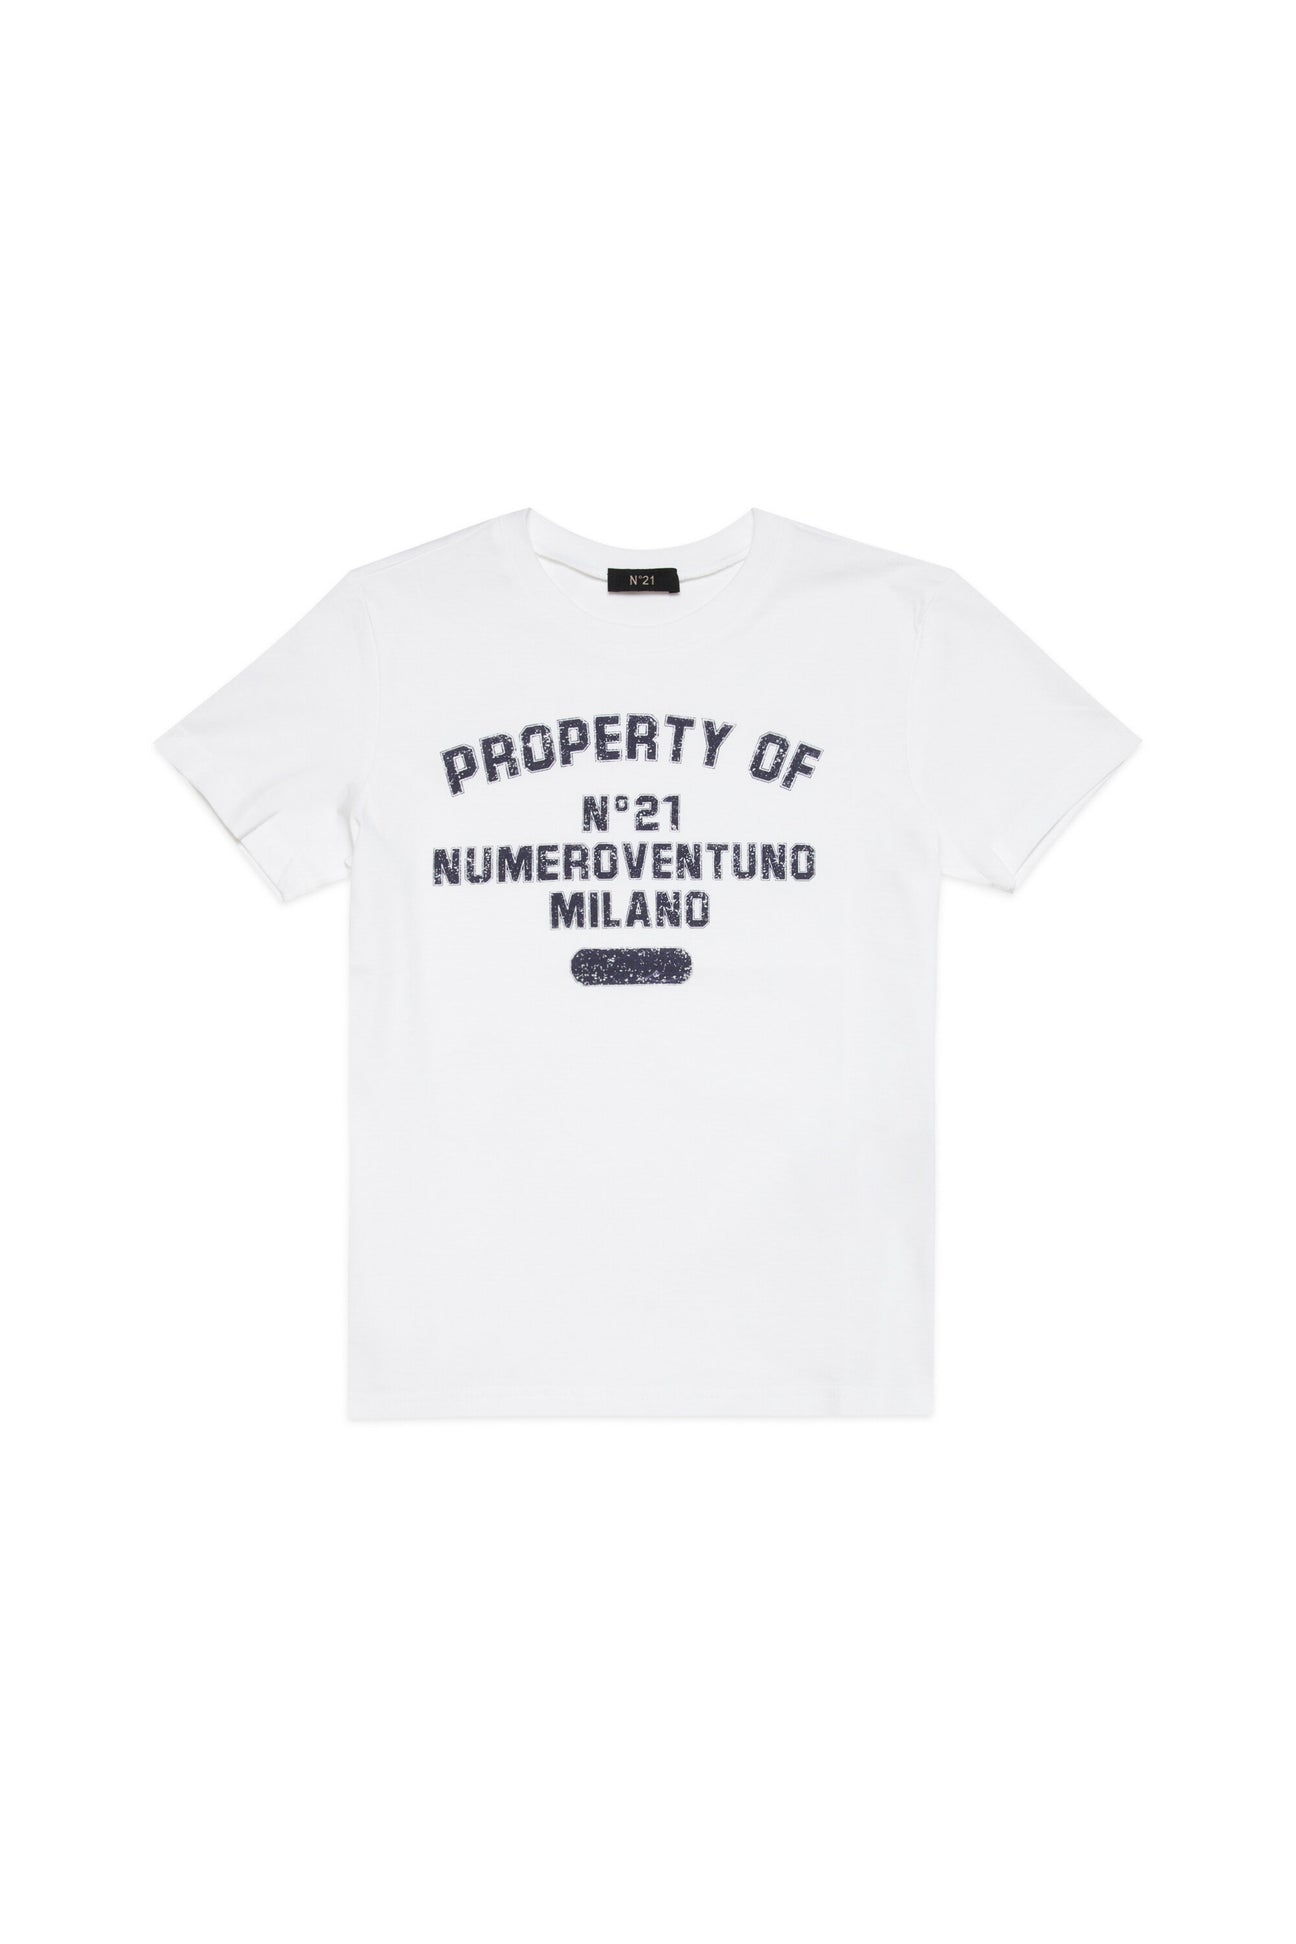 T-shirt con logo Property of N°21 